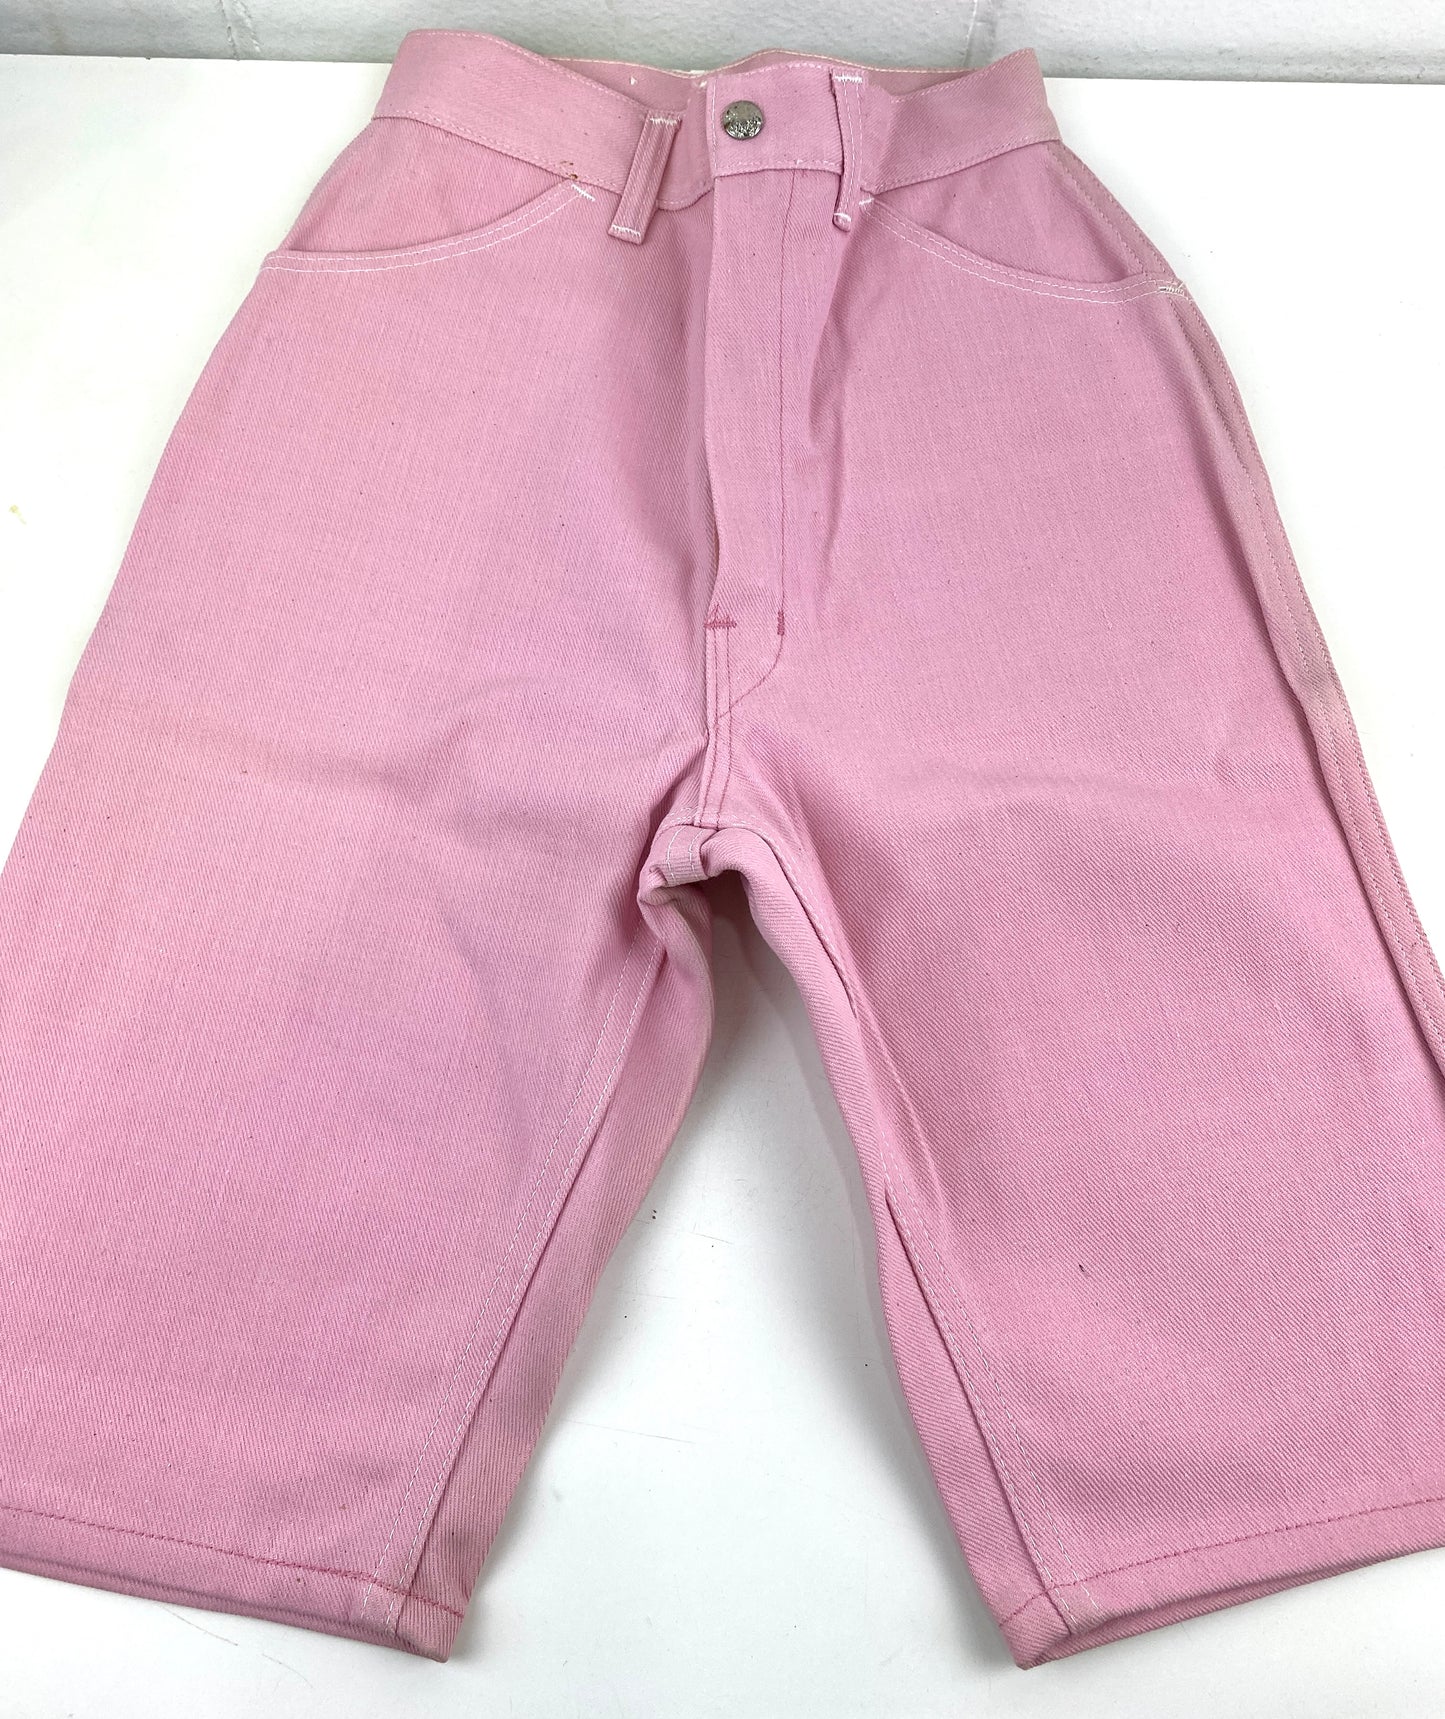 Vintage 1970s Deadstock Girls Jeans, Kids 'Big Yank' Cut-Off Jean Shorts, Pink Denim, NOS